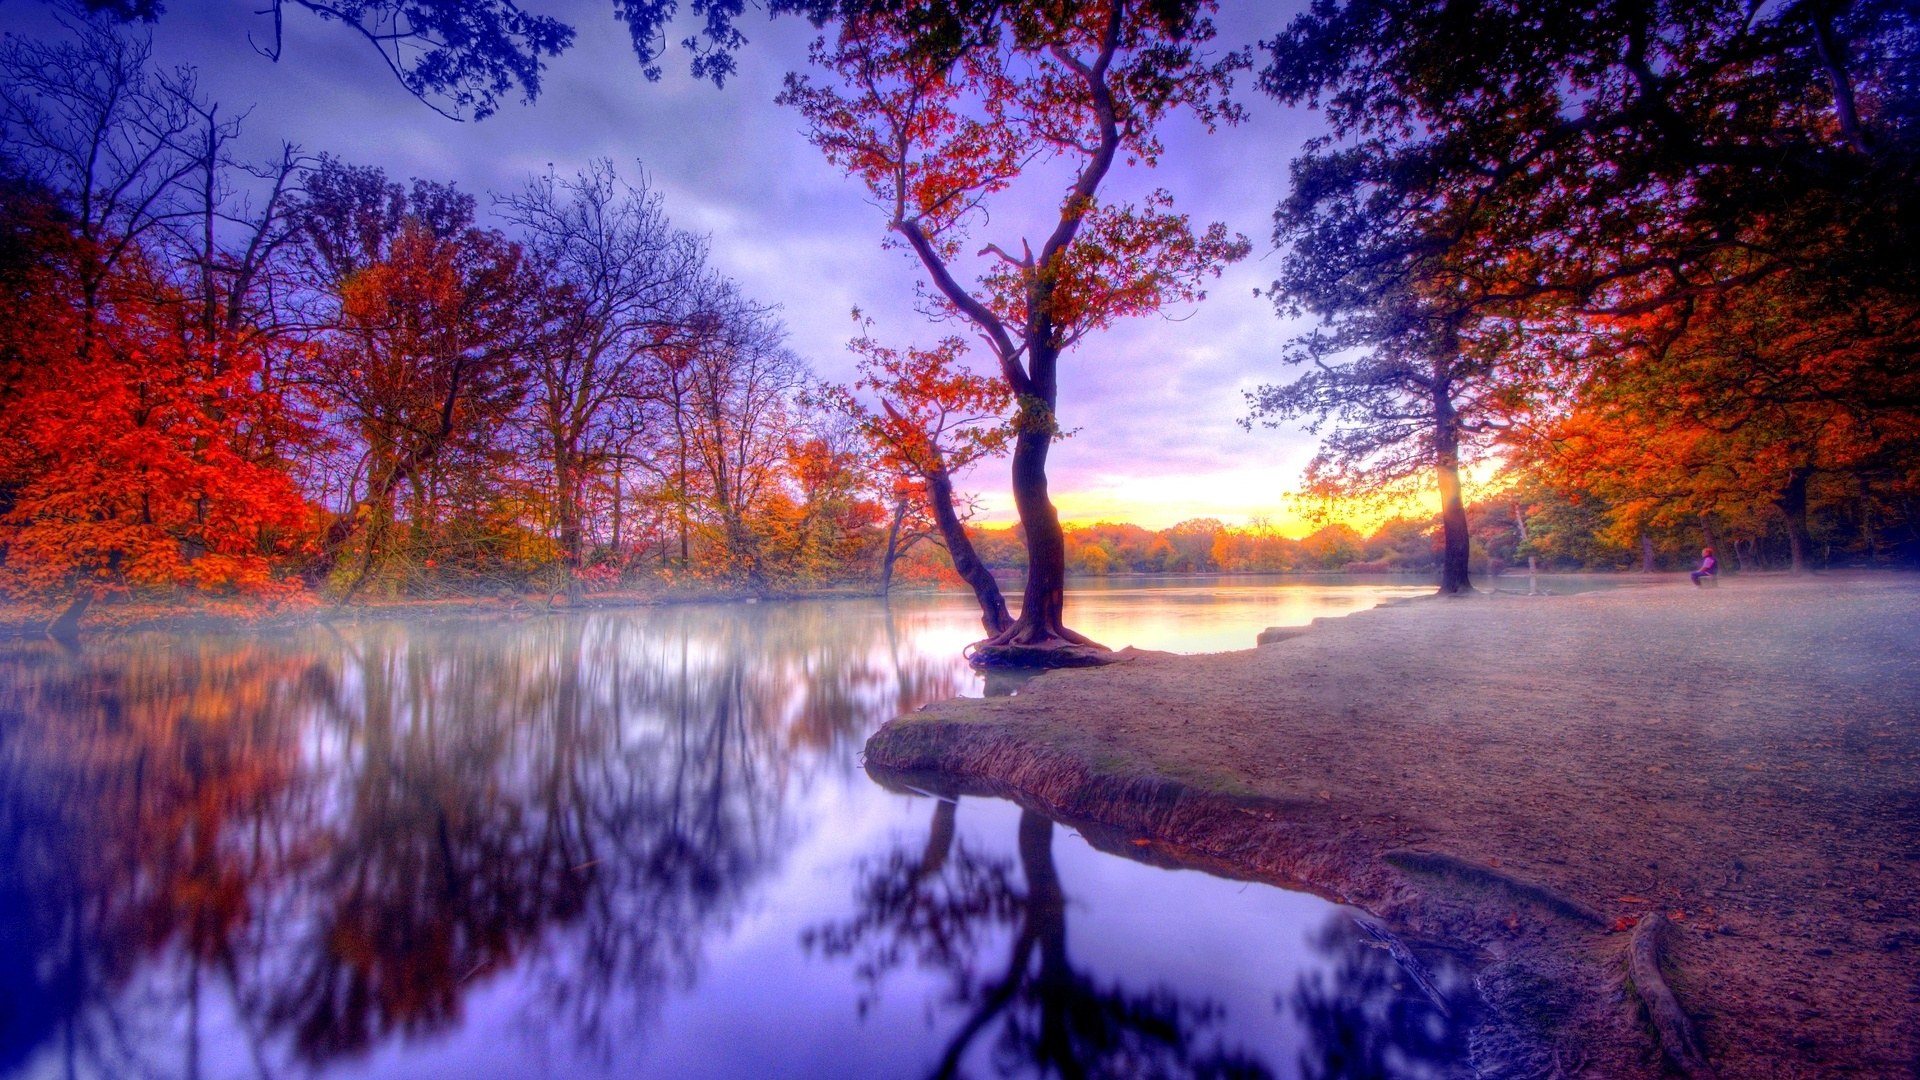 Free download Autumn Landscape Full HD Desktop Wallpapers 1080p